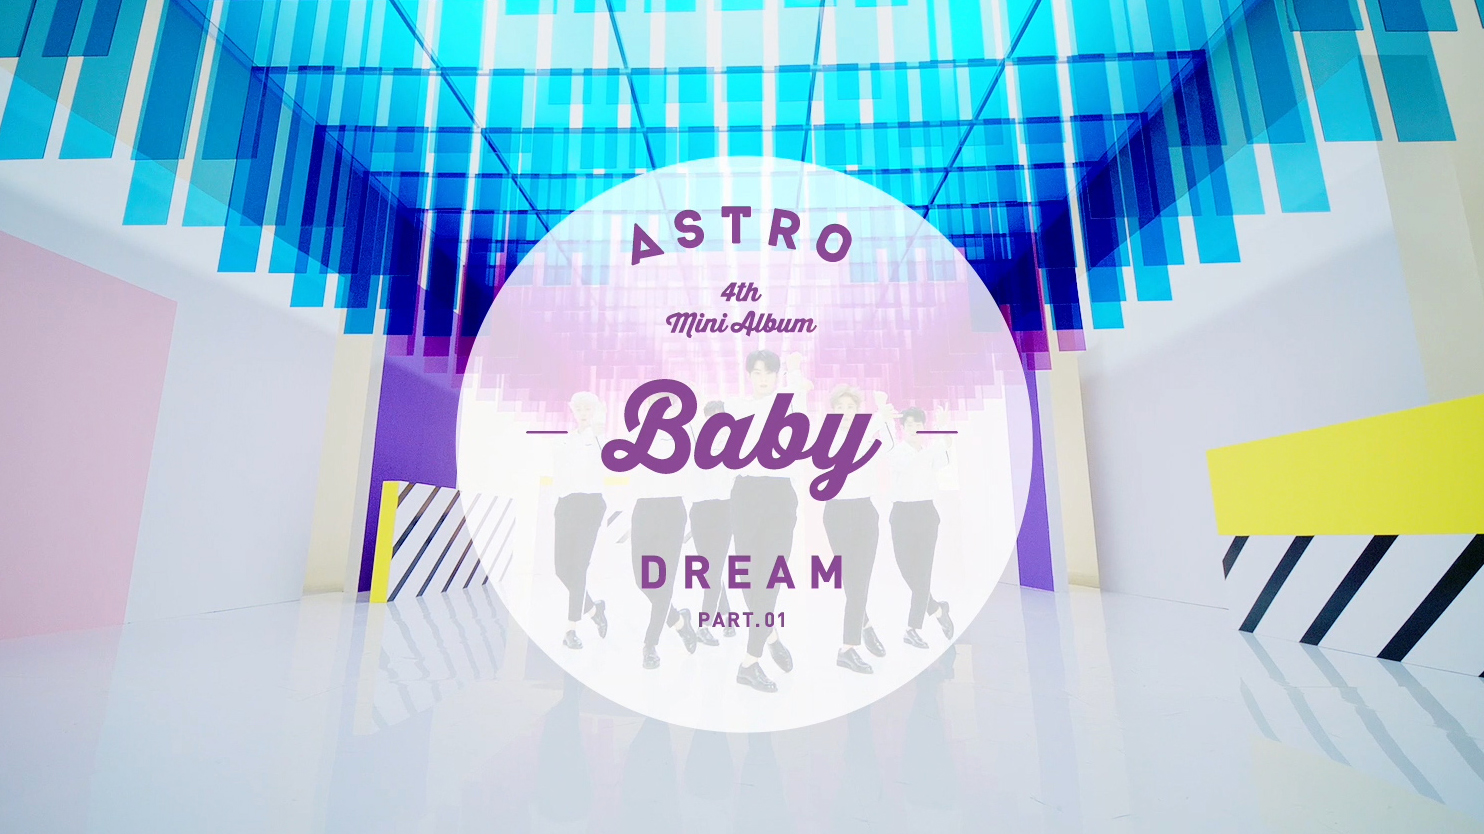 ASTRO 아스트로 - Baby M/V (Performance Ver.)